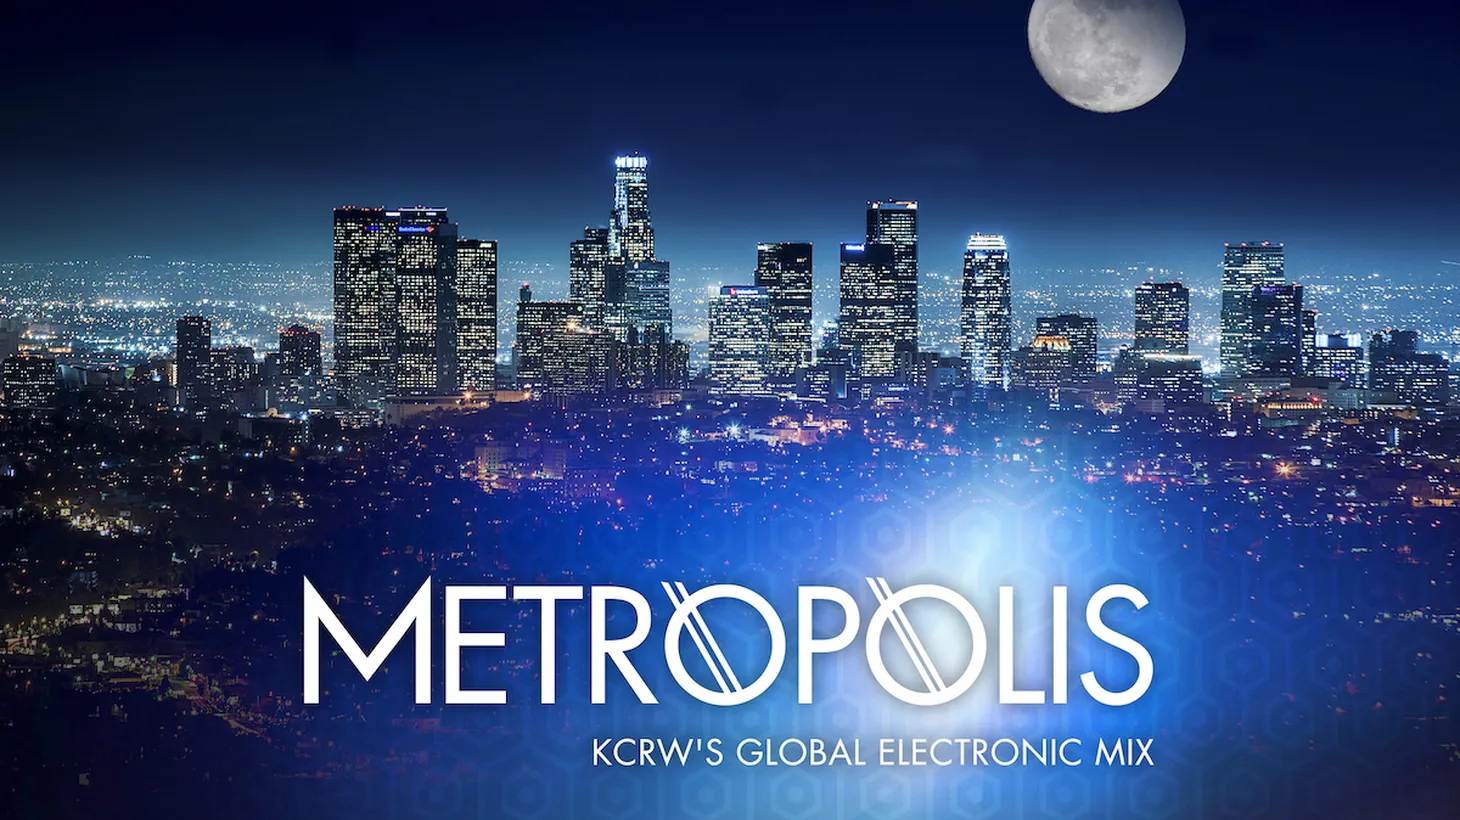 Metropolis playlist February 25, 2023.